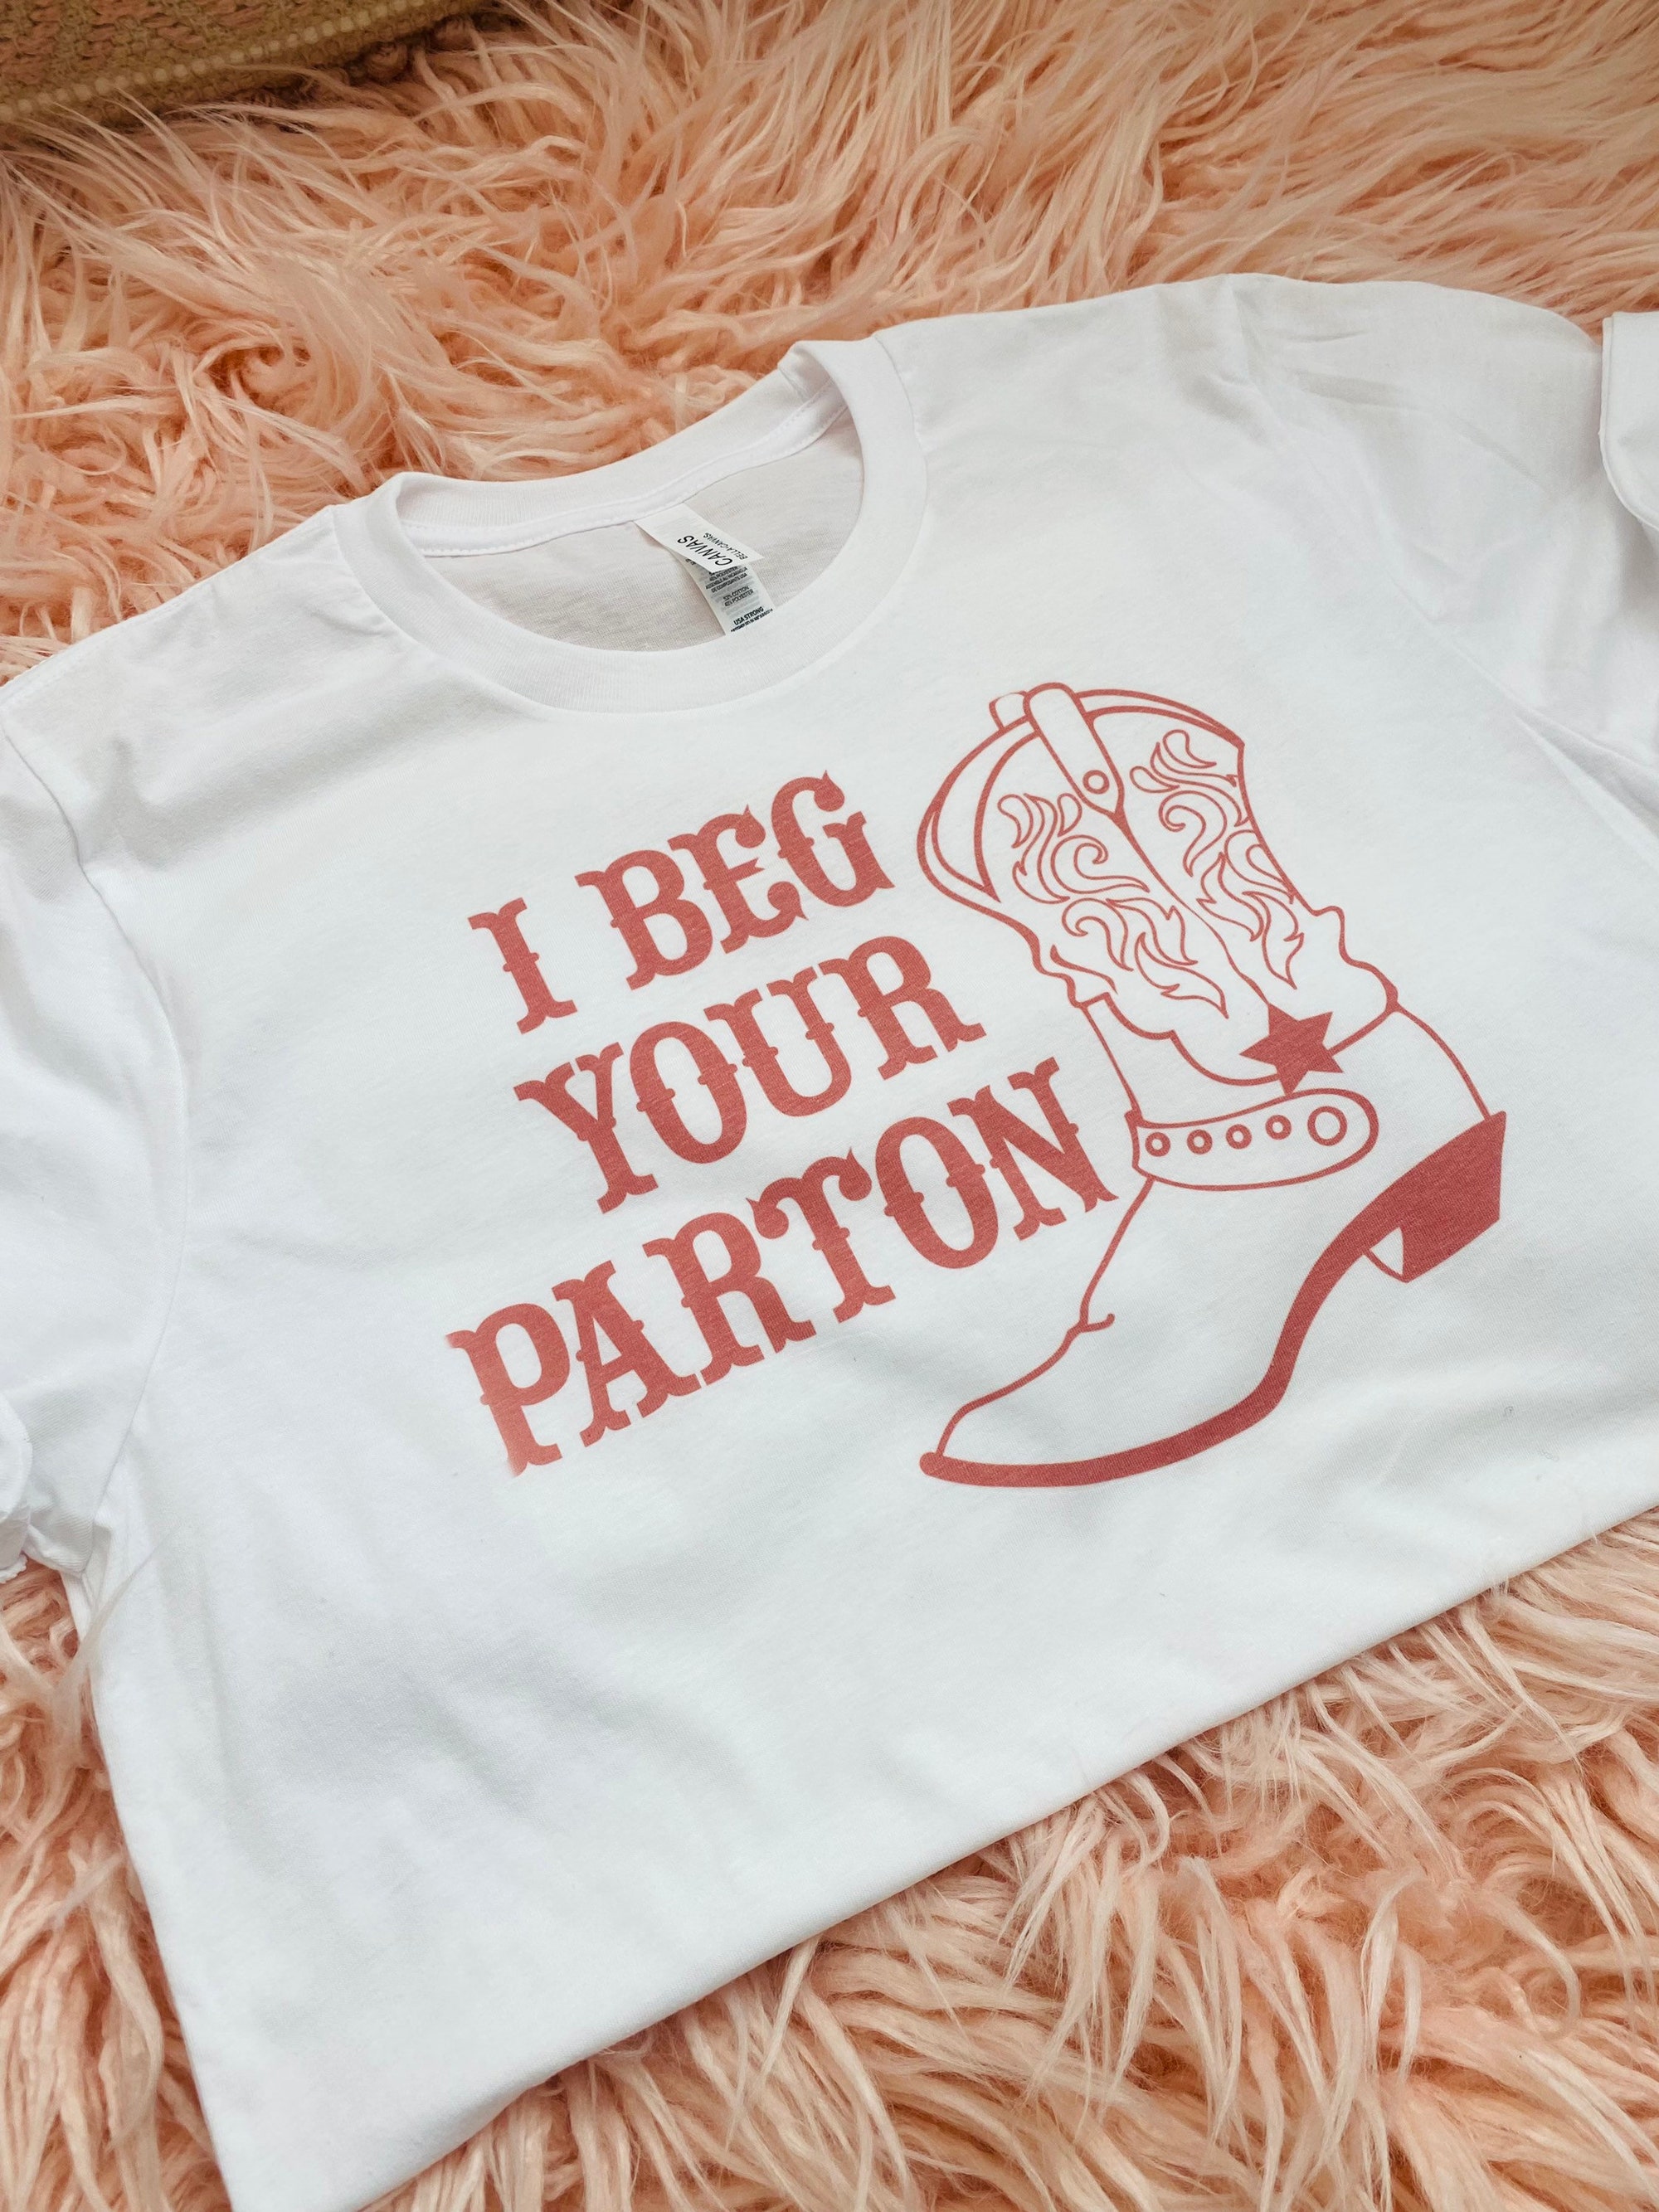 I Beg Your Parton Dolly shirt